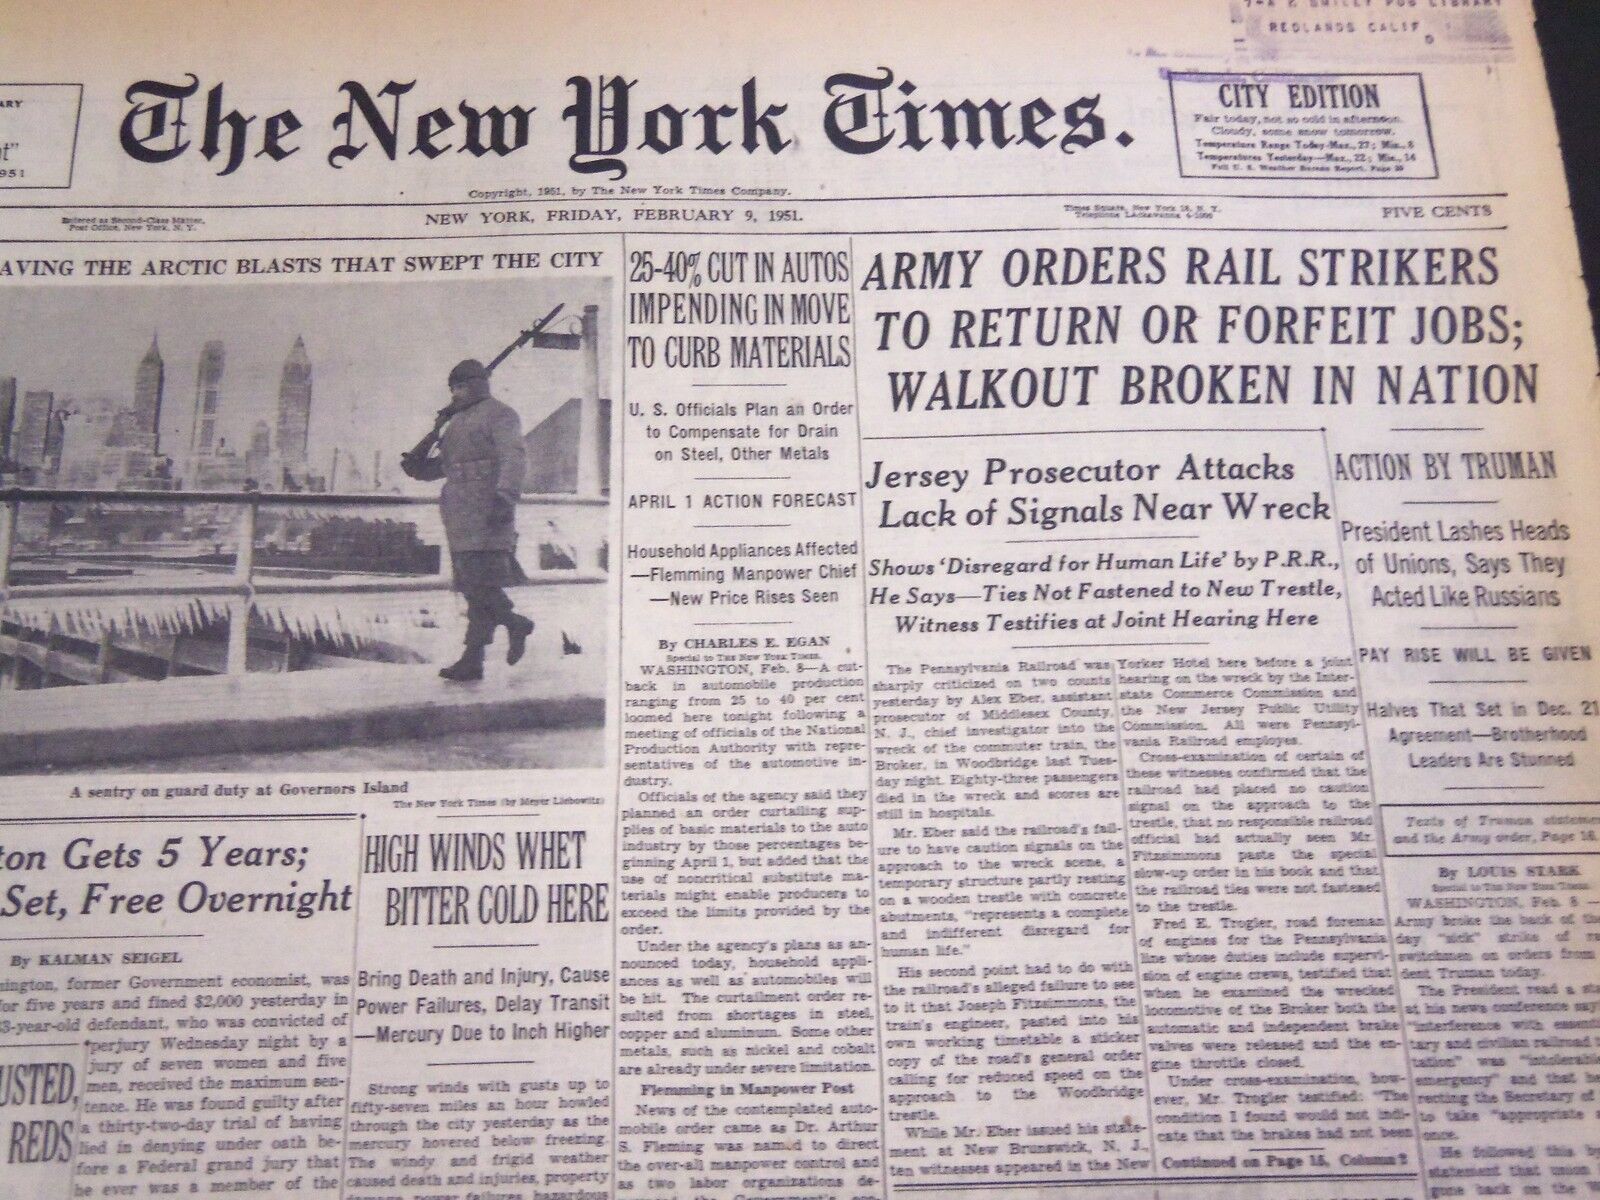 1951 FEBRUARY 9 NEW YORK TIMES - ARMY ORDERS RAIL STRIKERS TO RETURN - NT 4279